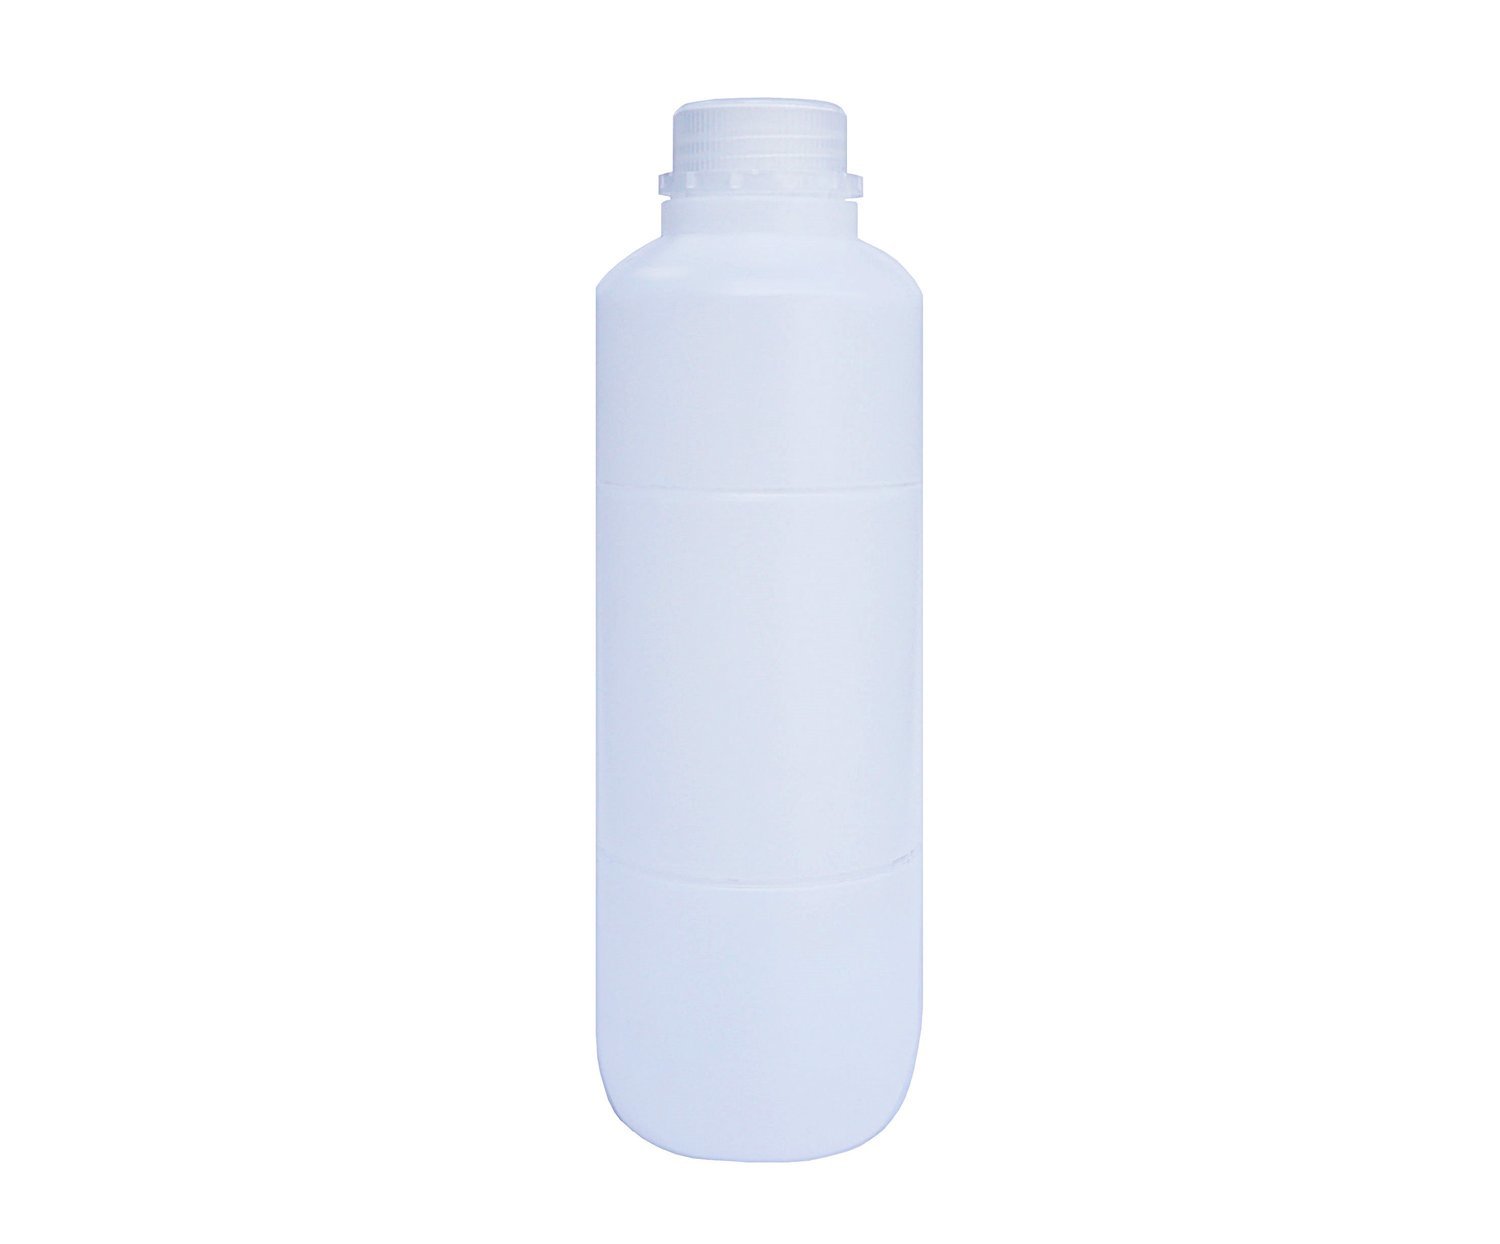 1Liter, Plastic Straight "MILK" Bottle w/ Tamper Screw Cap